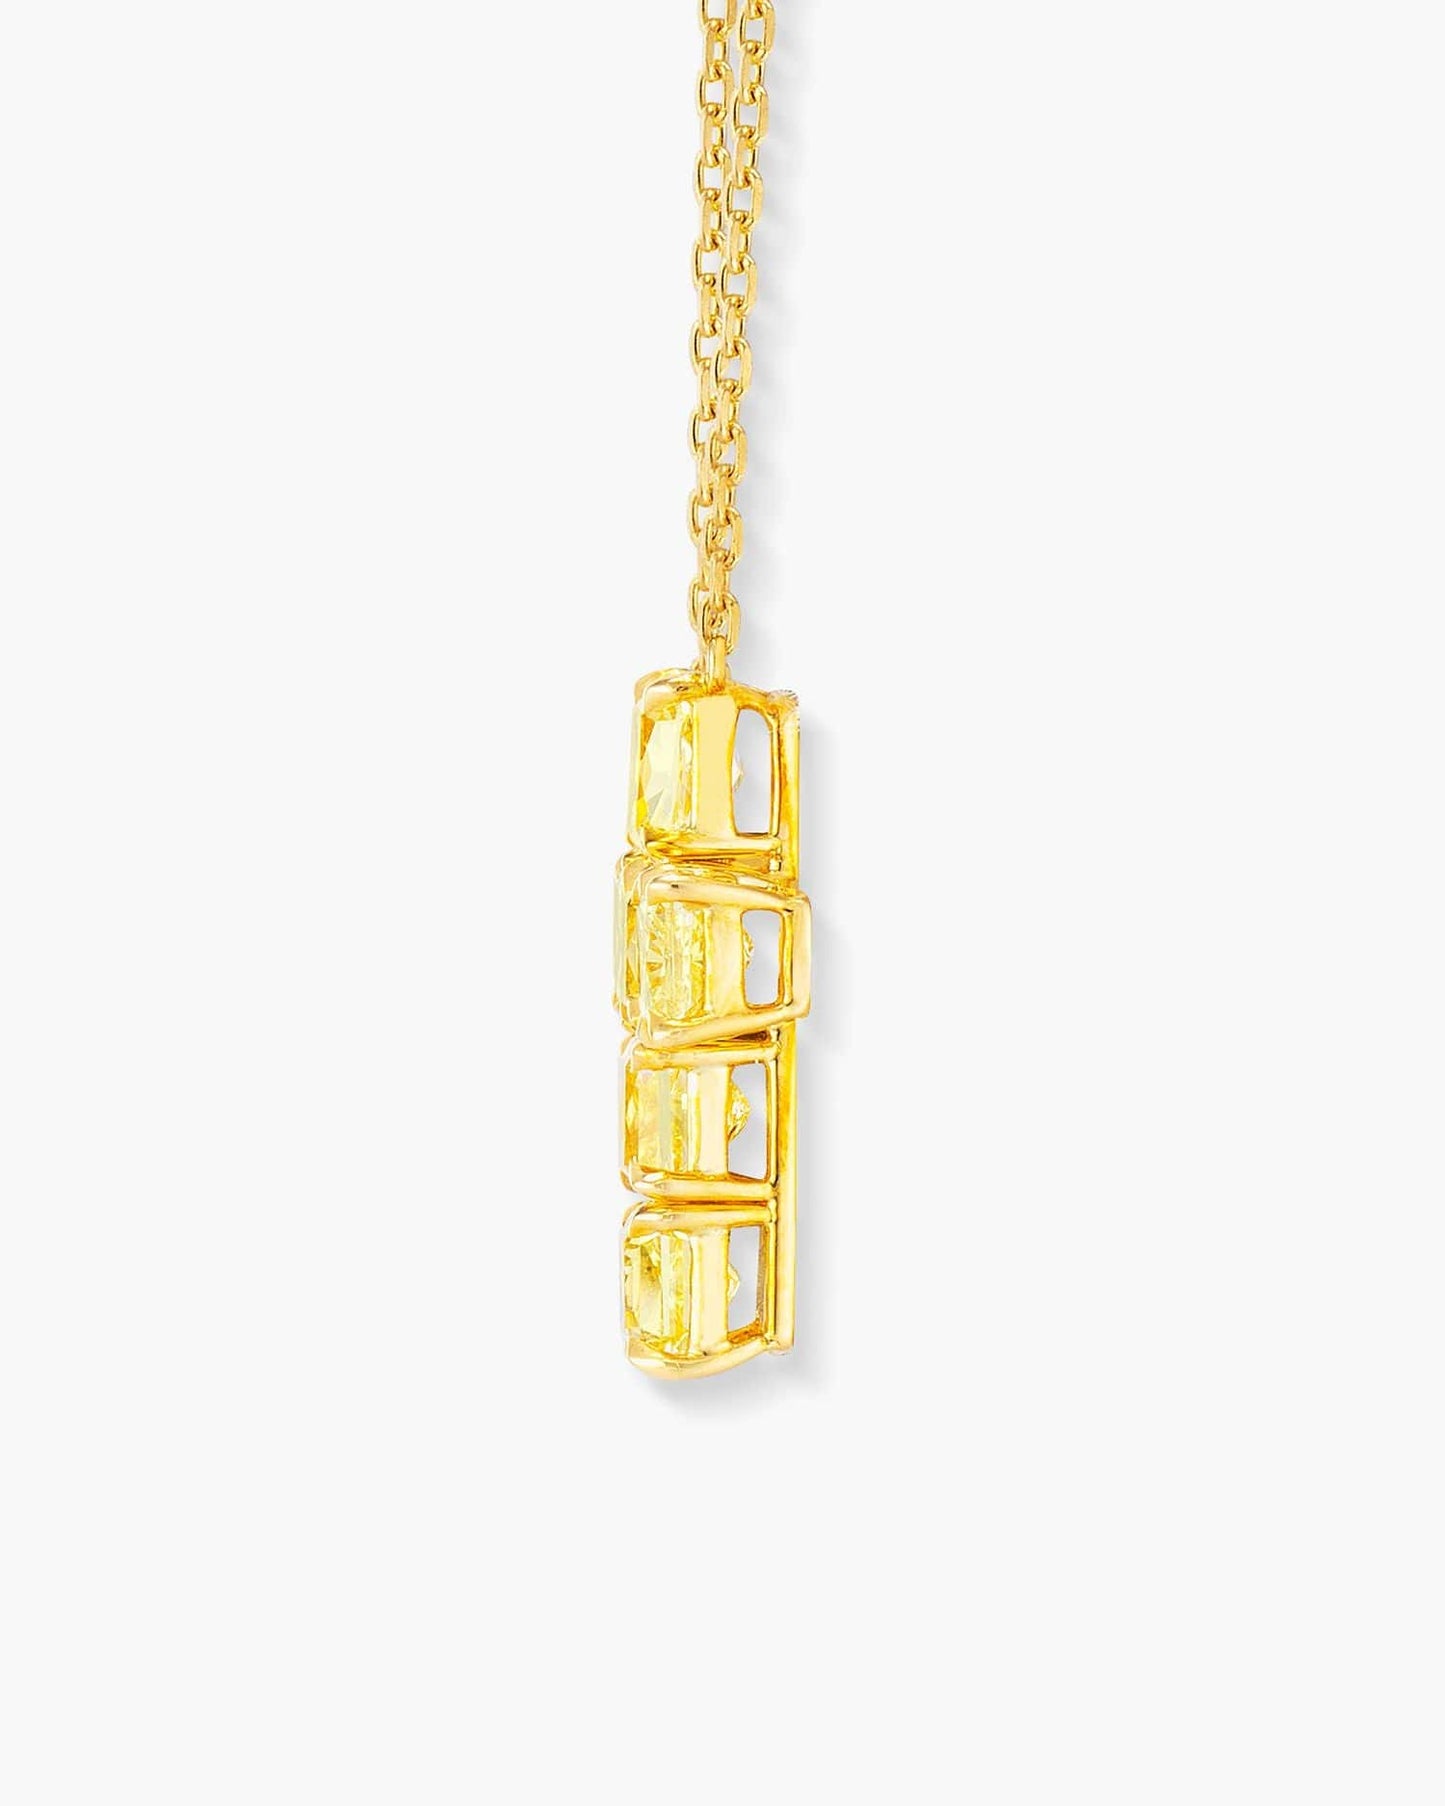 Fancy Shaped Yellow Diamond Cross Pendant Necklace, 2.70 carats